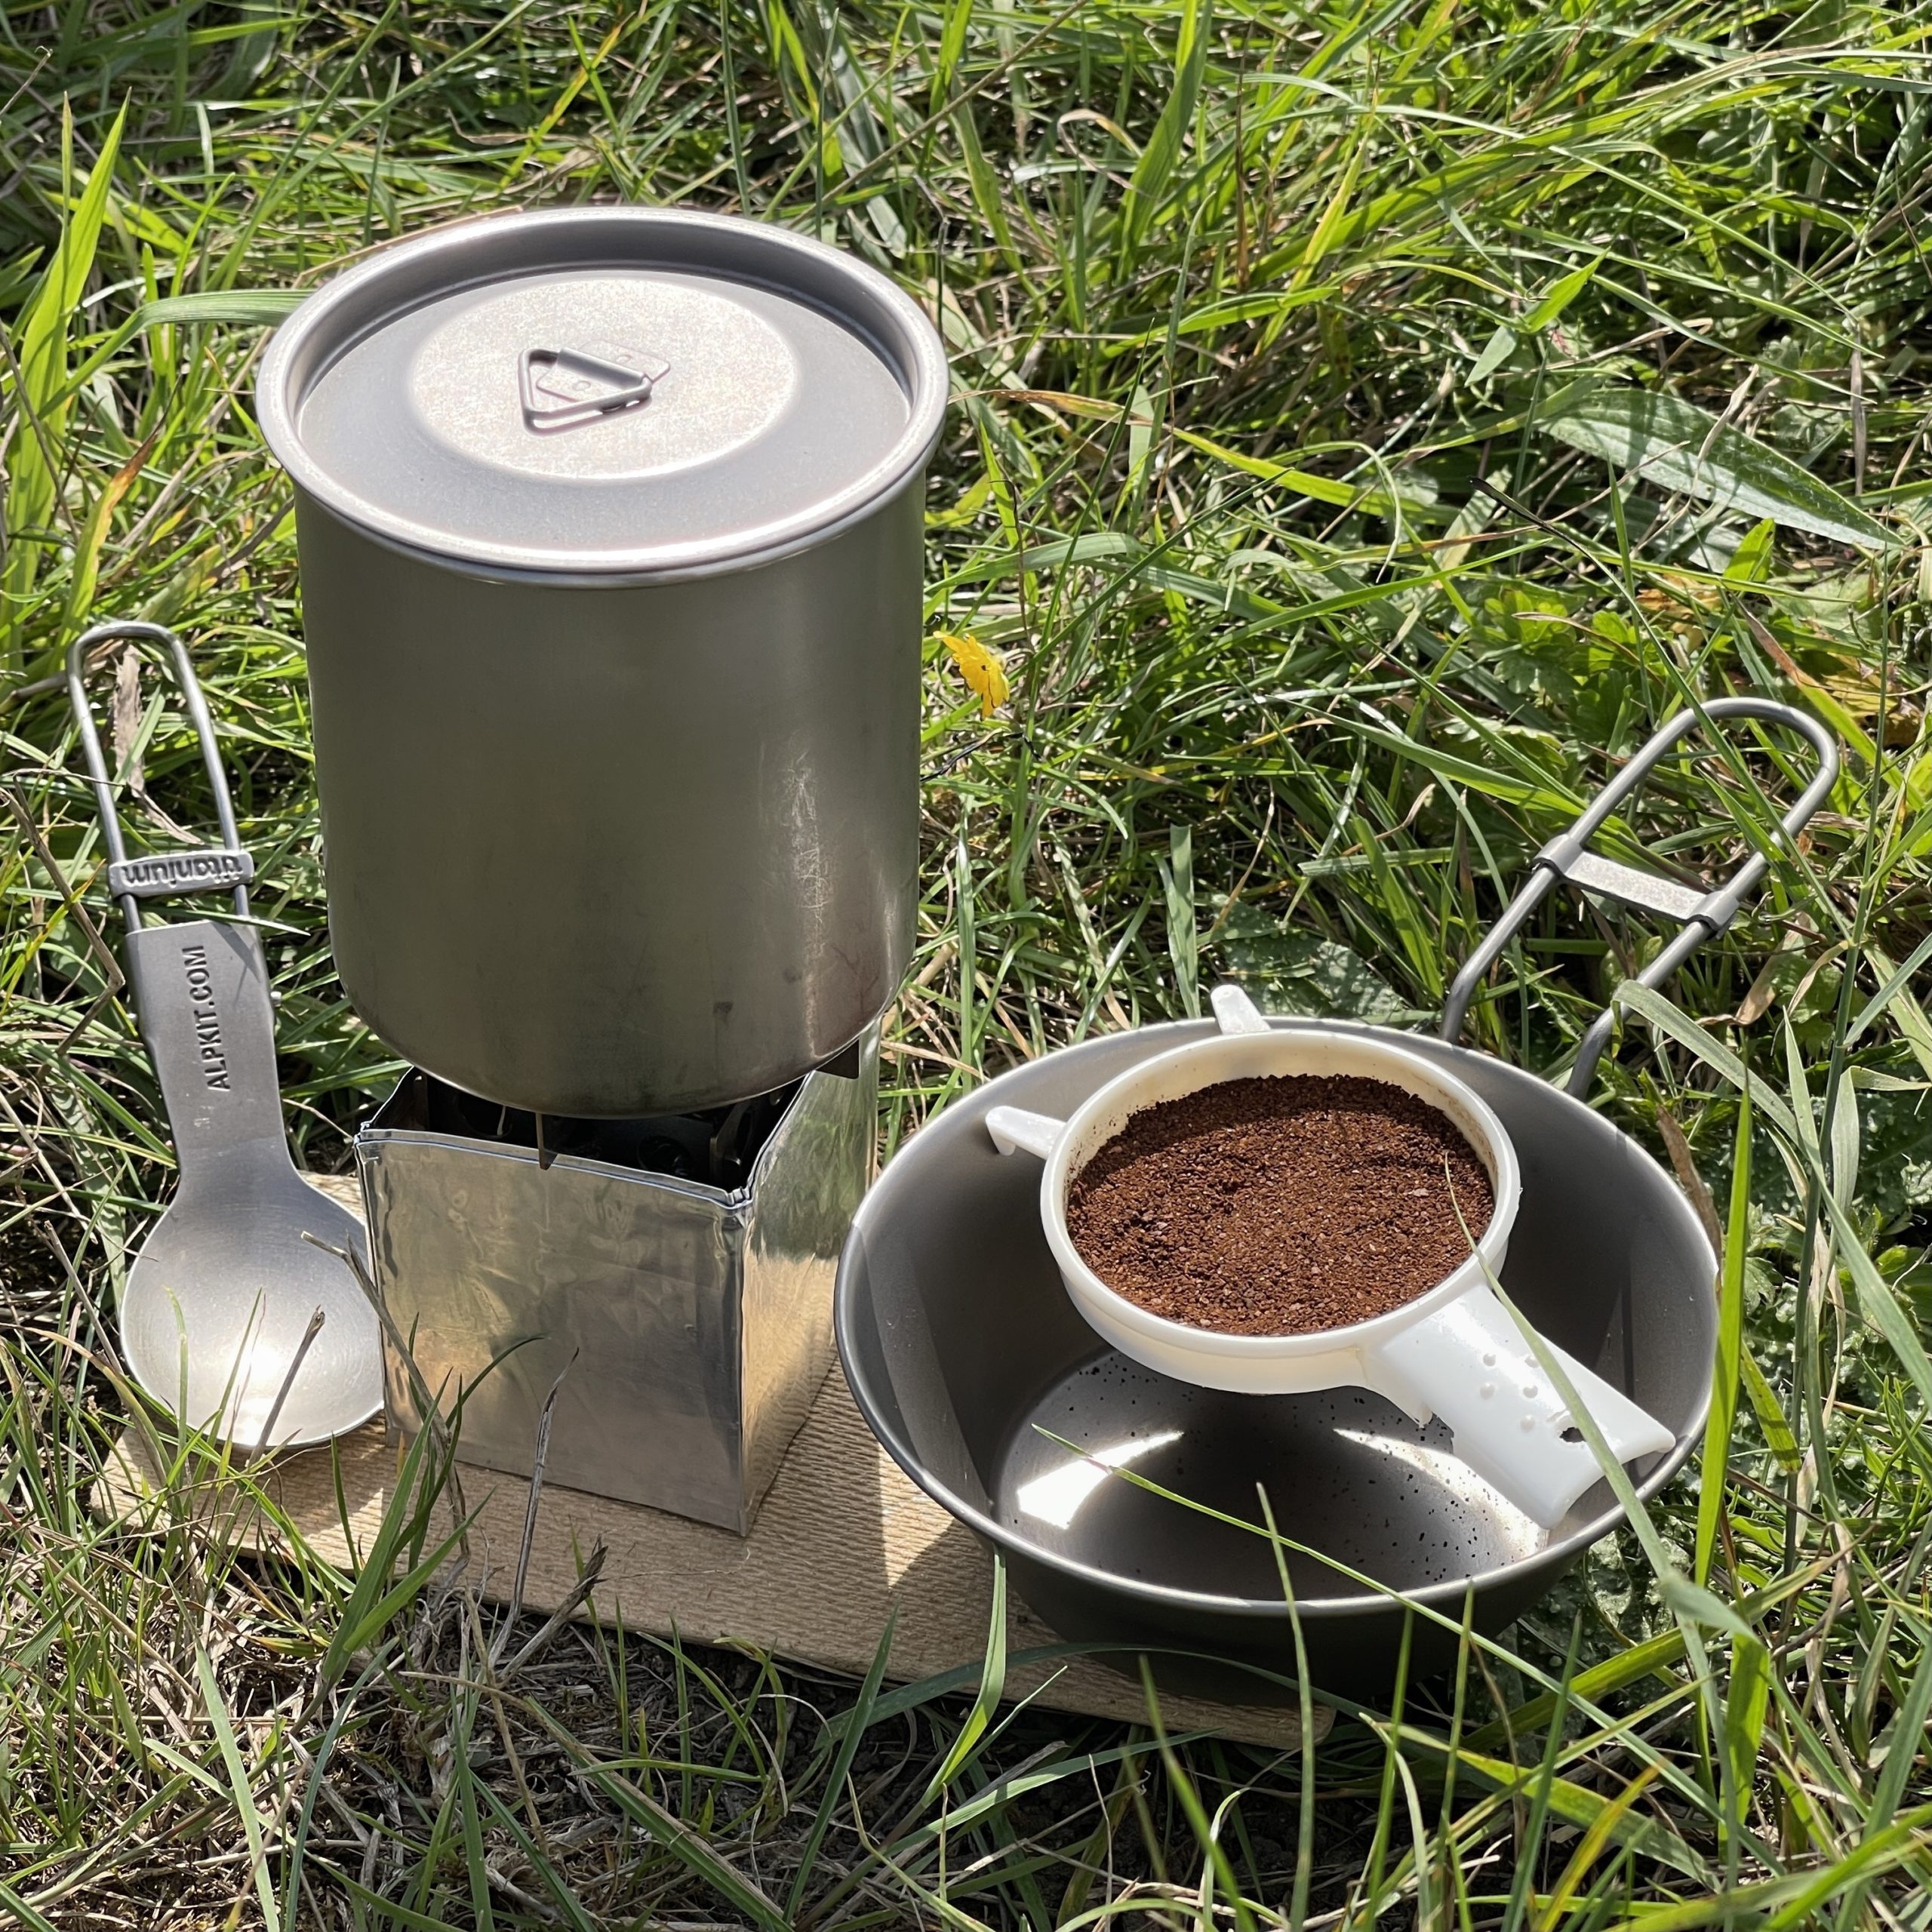 Camping coffee gear - MSR mug, titanium Sierra cup and Alpkit folding spoon